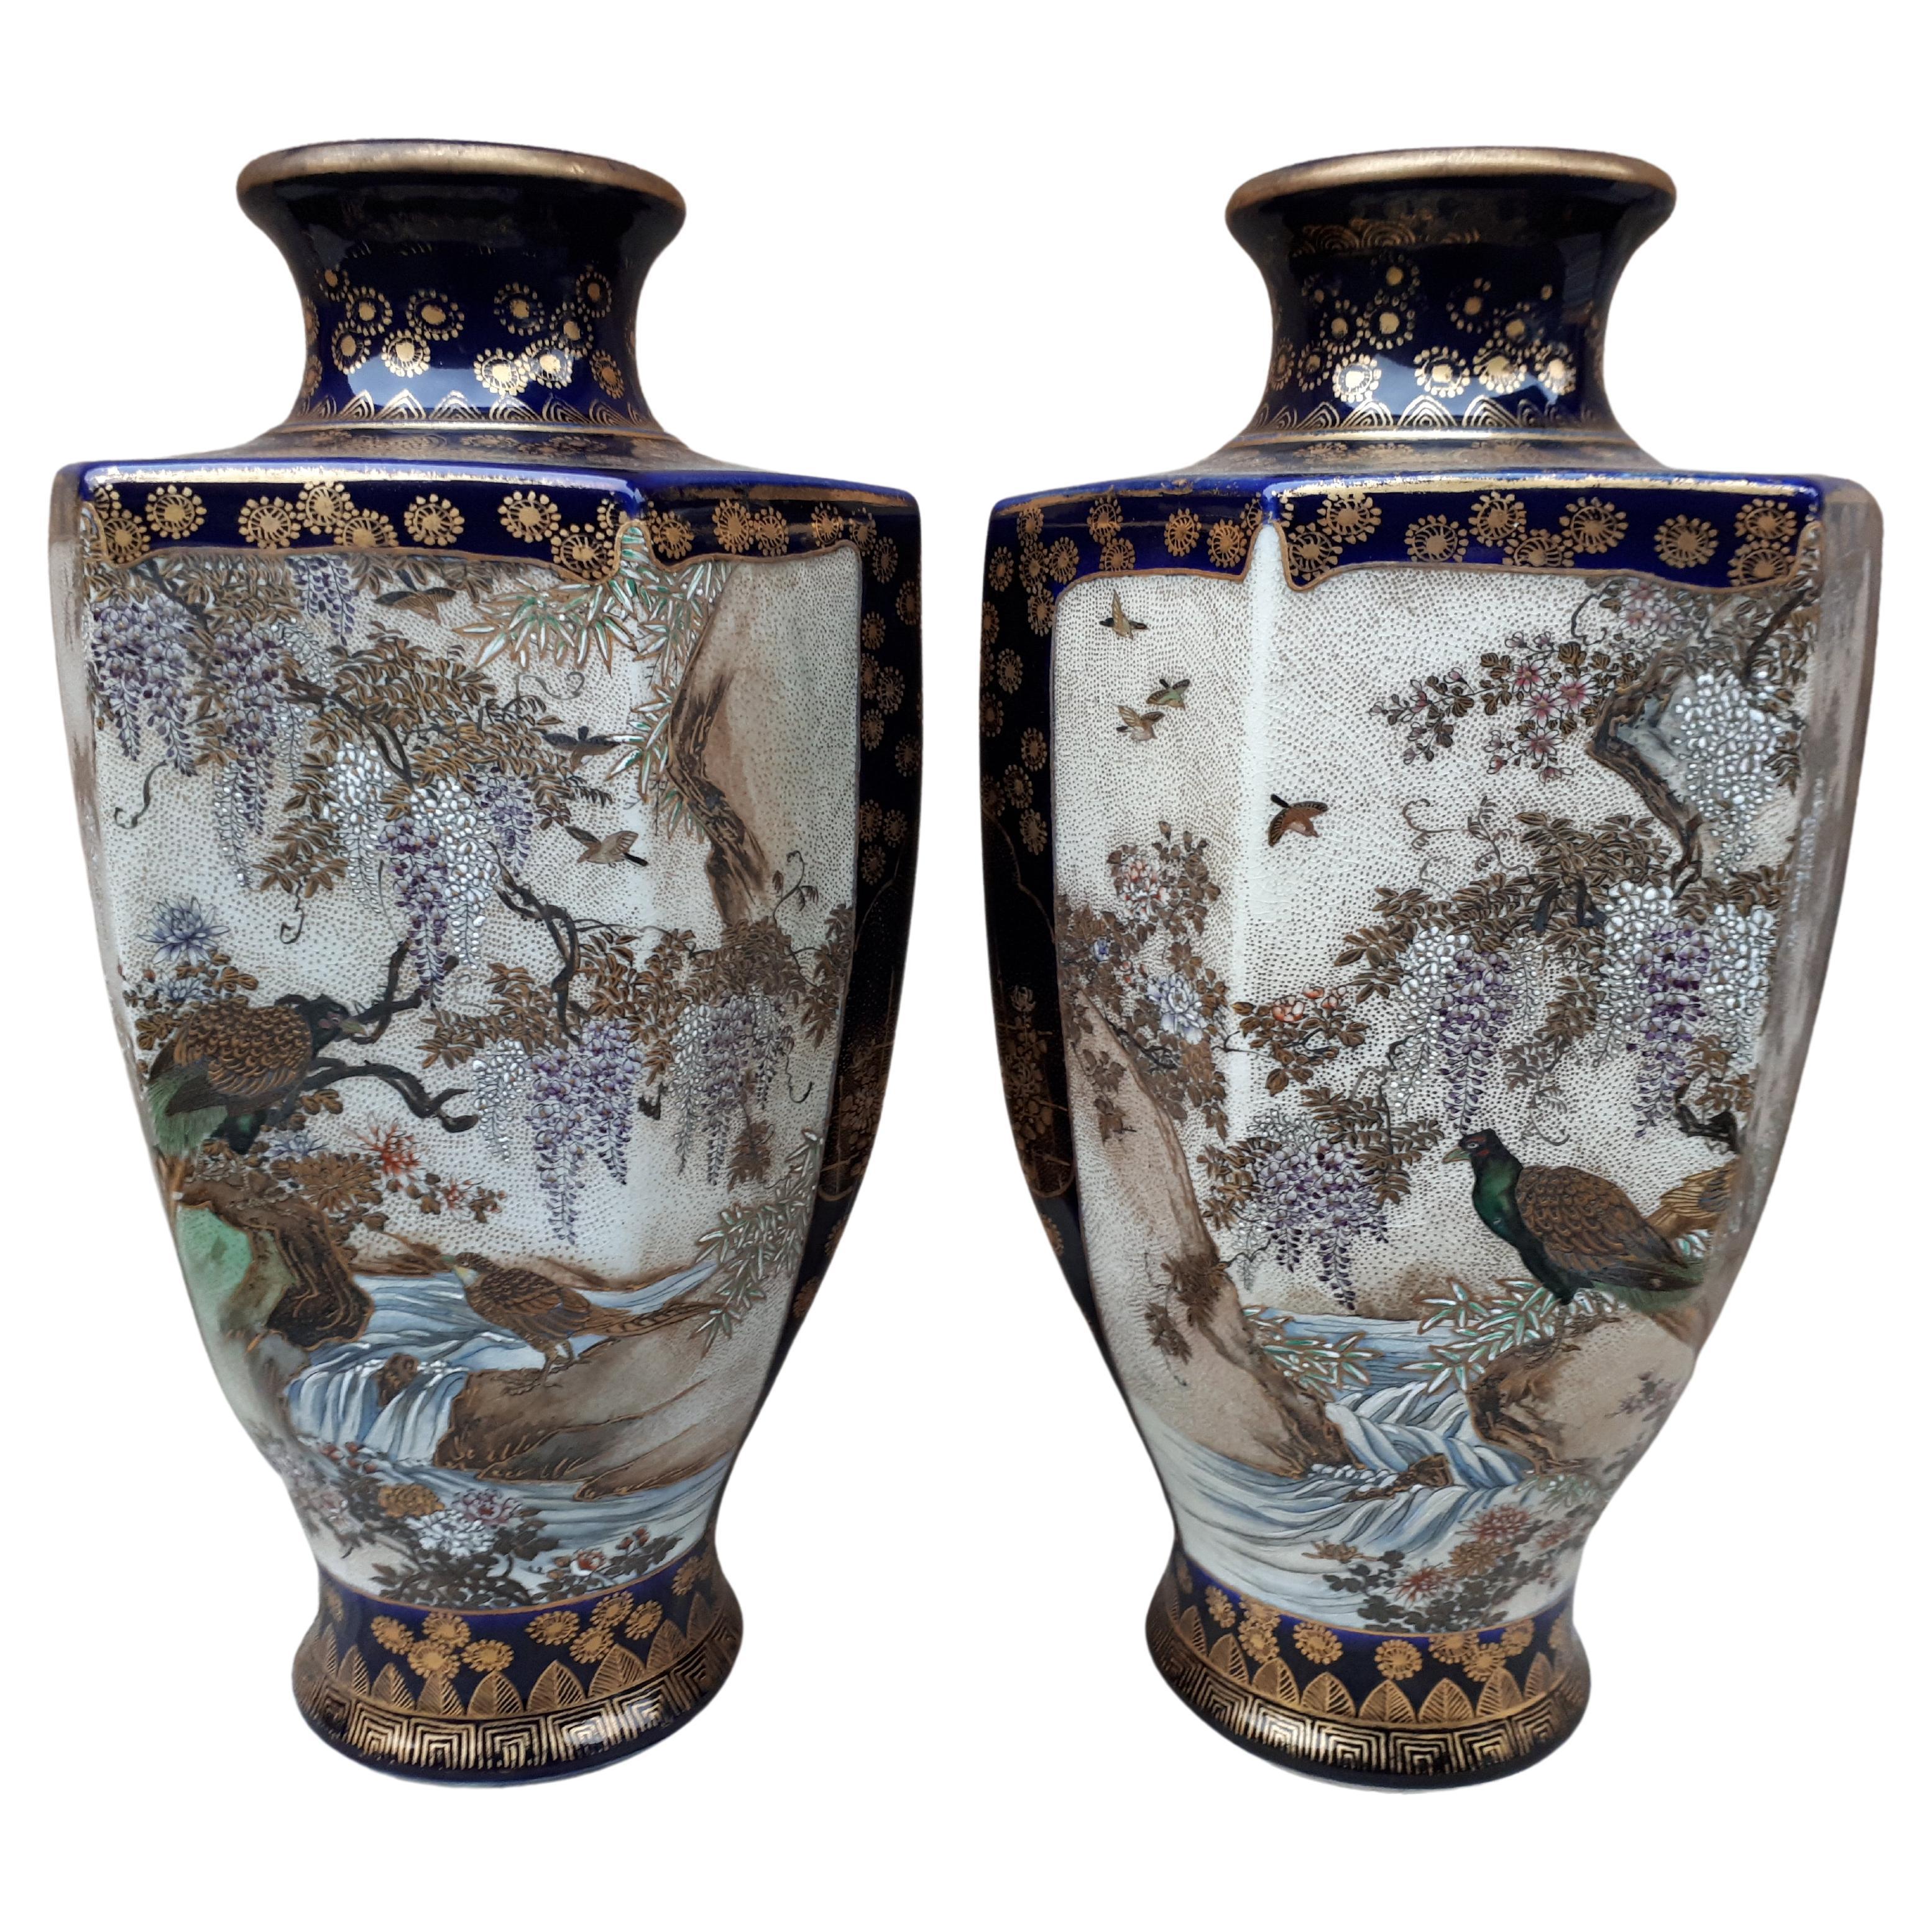 Rare Pair of Japanese Satsuma Earthenware Vases, Japan Late Edo Period